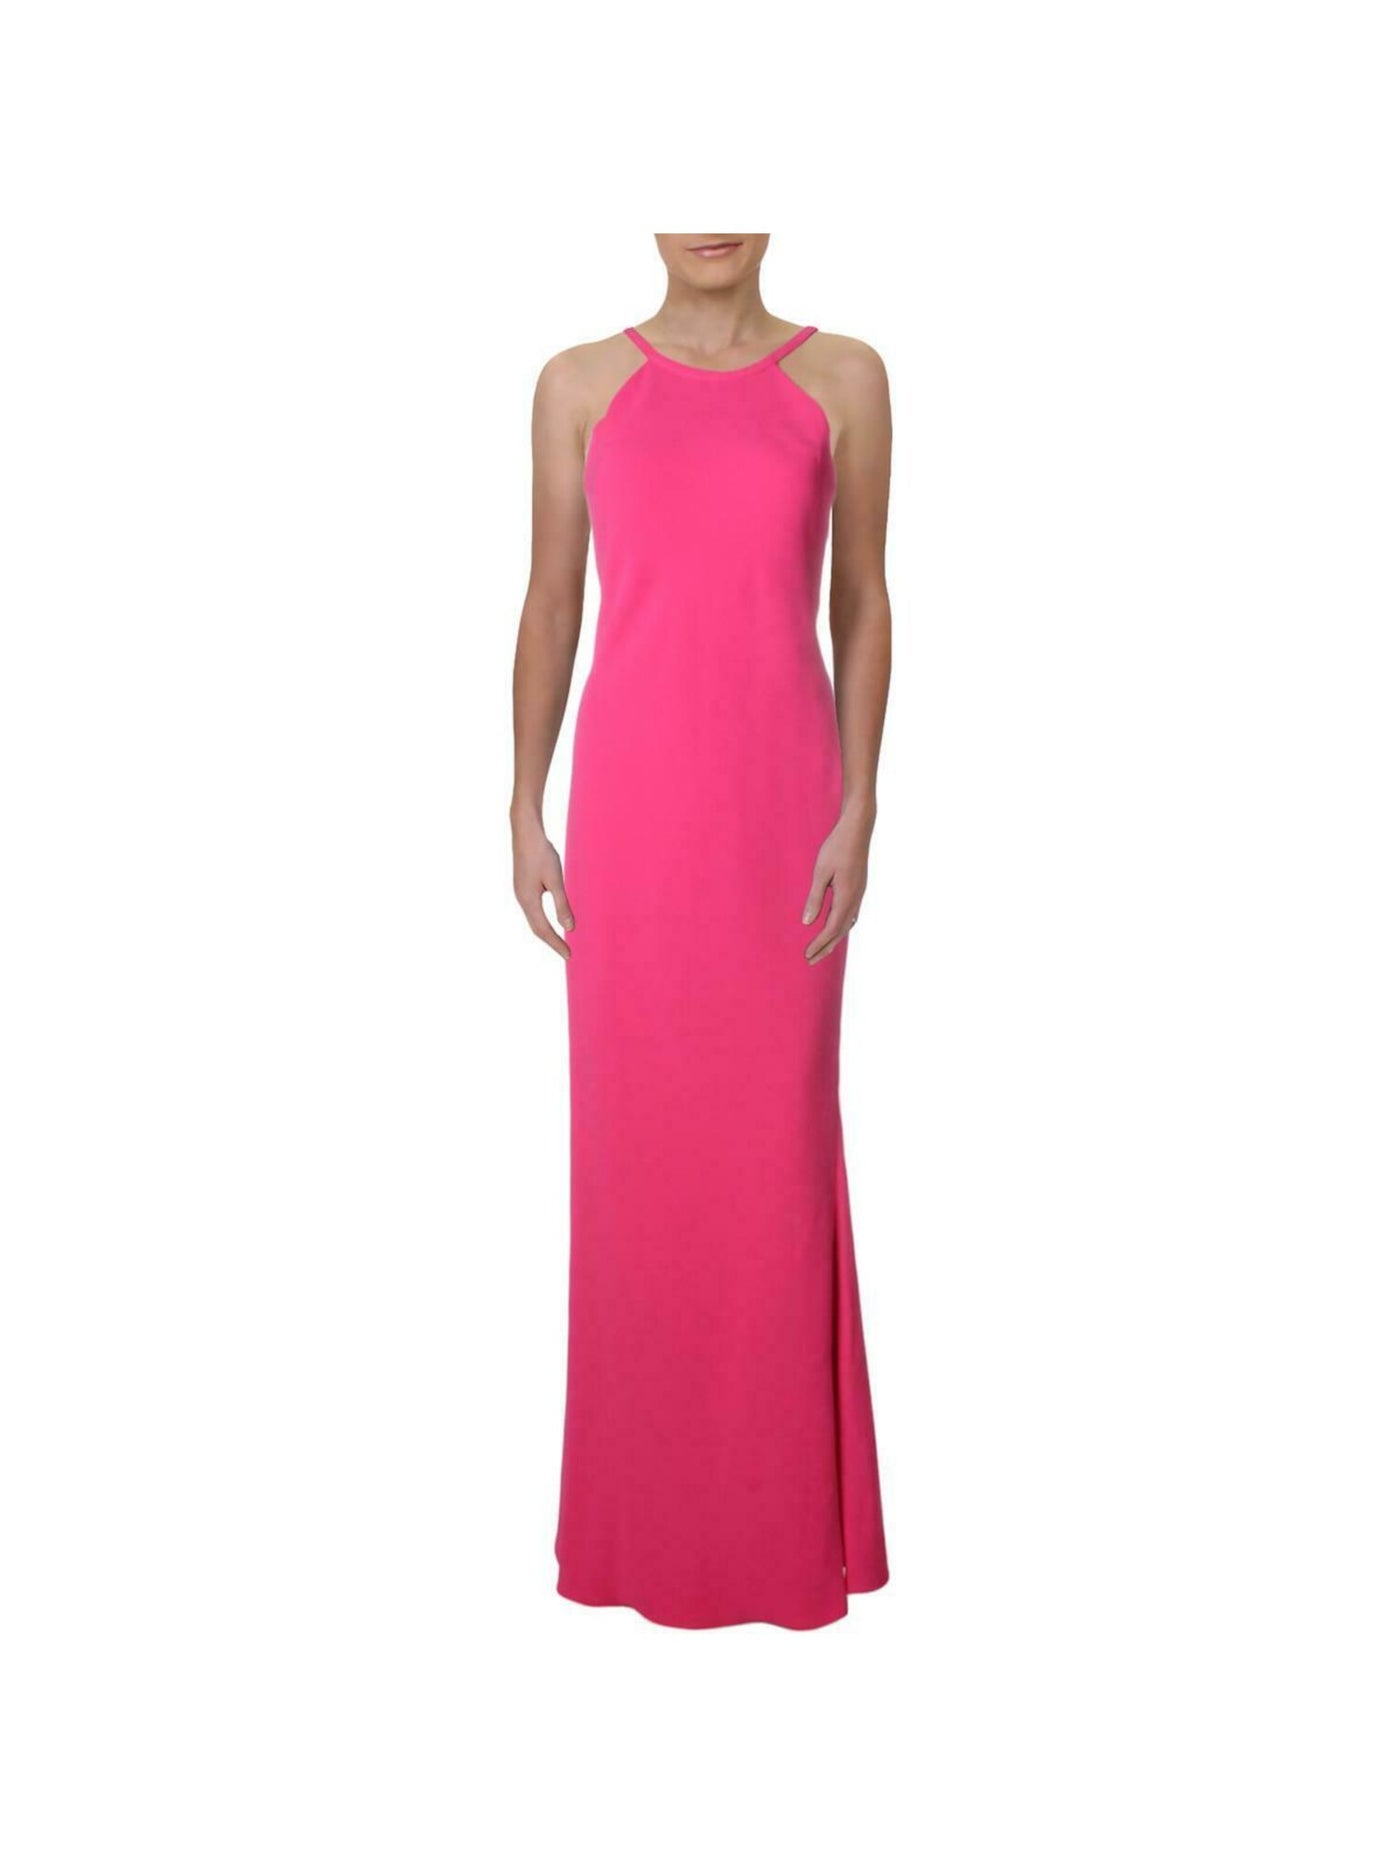 CALVIN KLEIN Womens Pink Sleeveless Halter Full-Length Evening Sheath Dress 8